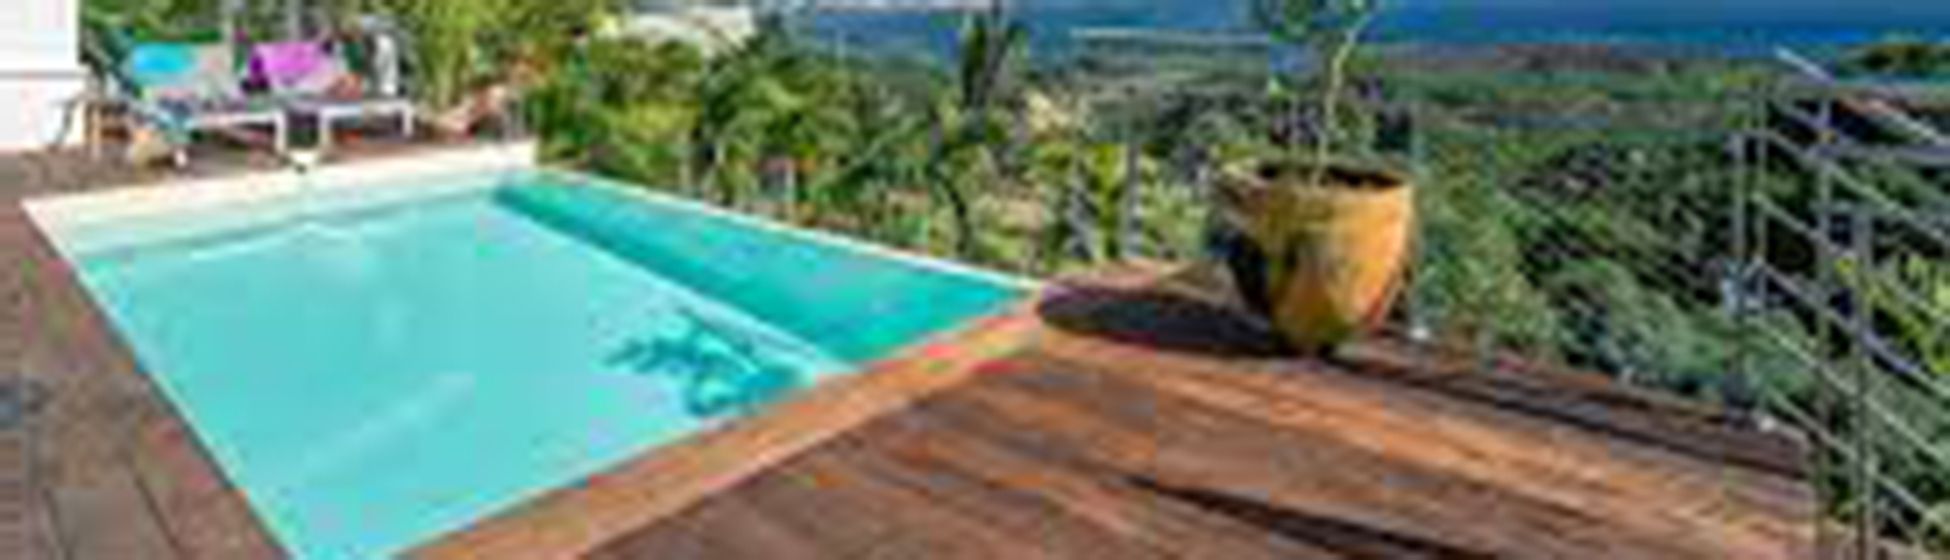 Location villa martinique avec piscine